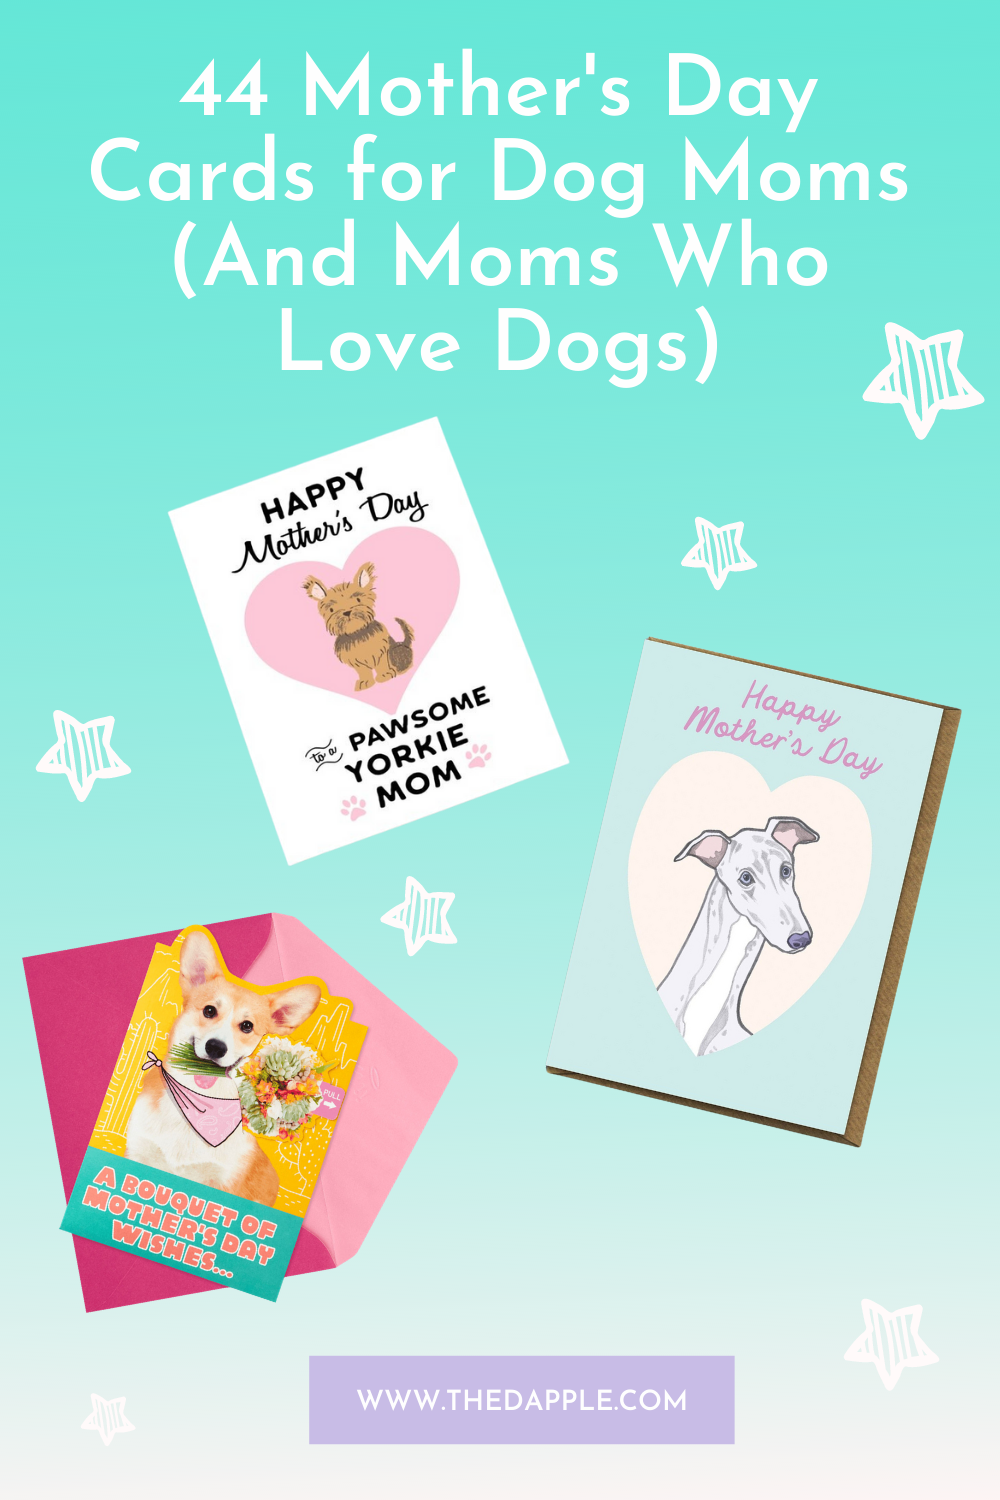 https://images.squarespace-cdn.com/content/v1/58909dda6b8f5ba2eda09210/1618960785894-P1UCZLQFUD76128VWIYI/Best+Mother%27s+Day+Cards+for+Dog+Moms+and+Dog+Lovers